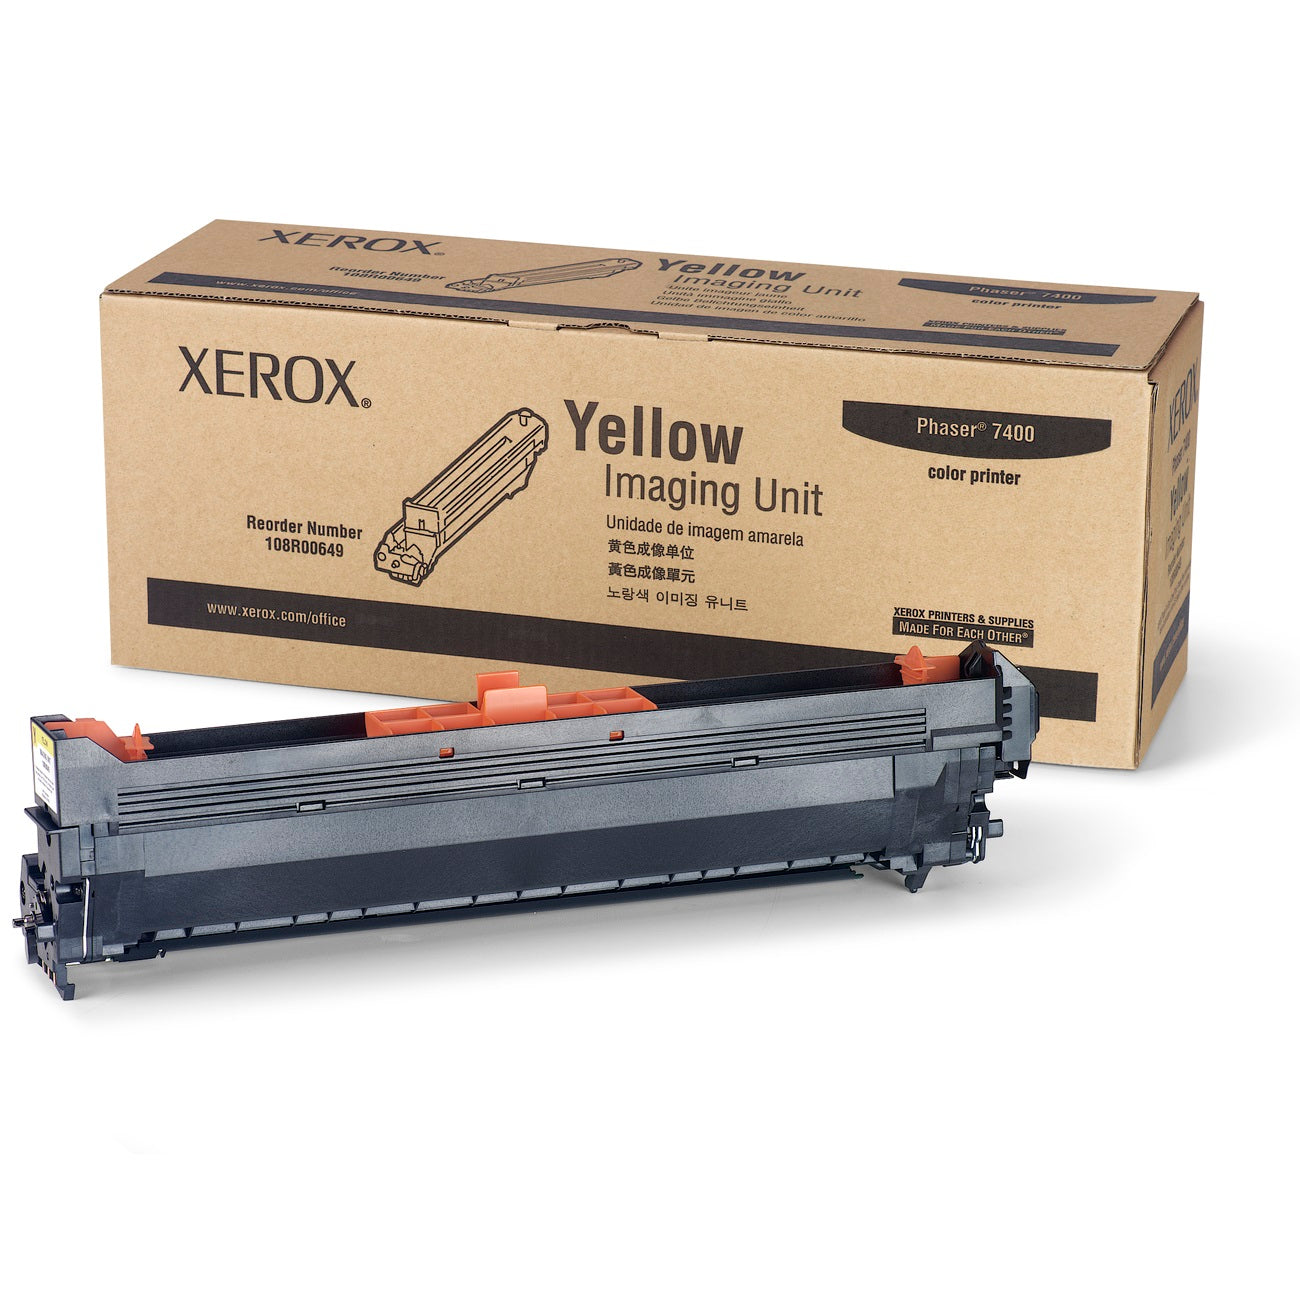 Absolute Toner Genuine XEROX 108R00649 Yellow Imaging Unit For Phaser 7400 Color Laser Printer Original Xerox Cartridges